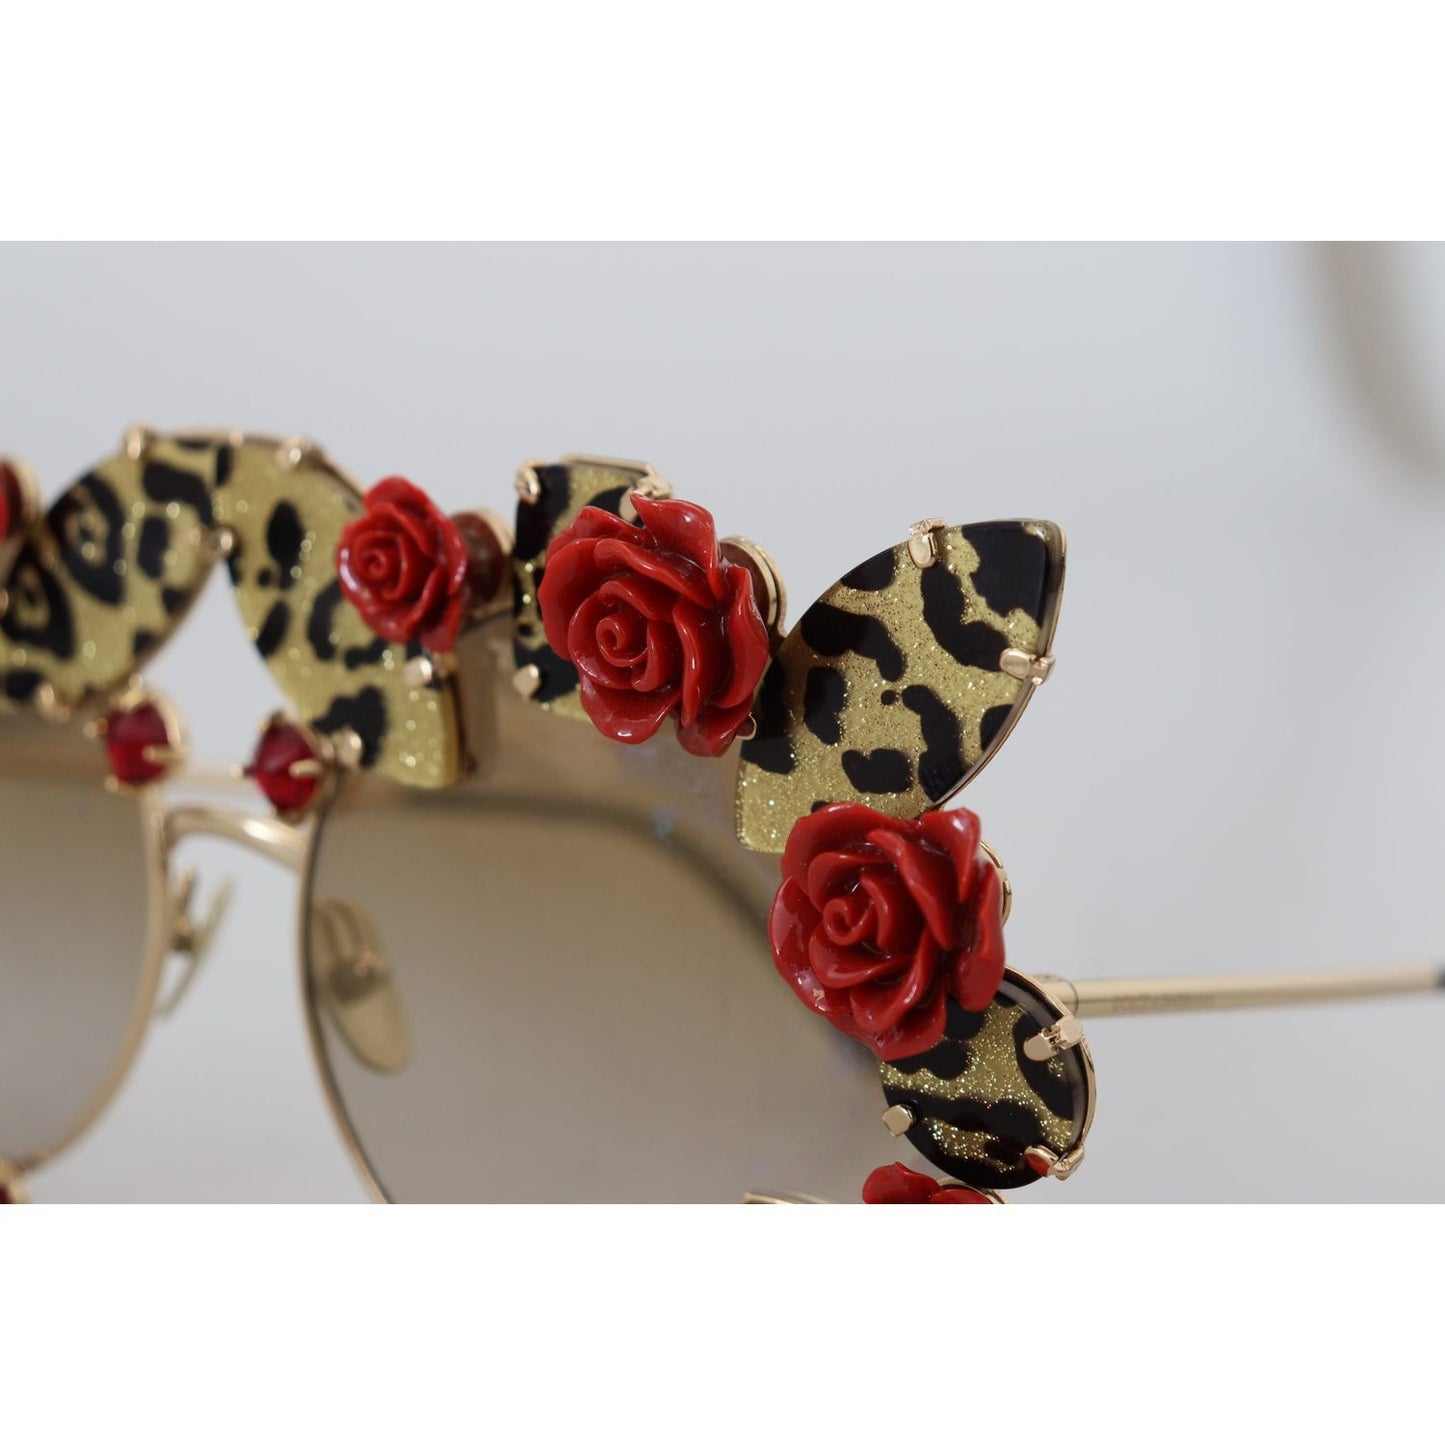 Dolce & Gabbana Elegant Round Rose-Embellished Sunglasses gold-metal-frame-roses-embellished-dg2207b-sunglasses IMG_1487-1-scaled-b85333ef-bfe.jpg